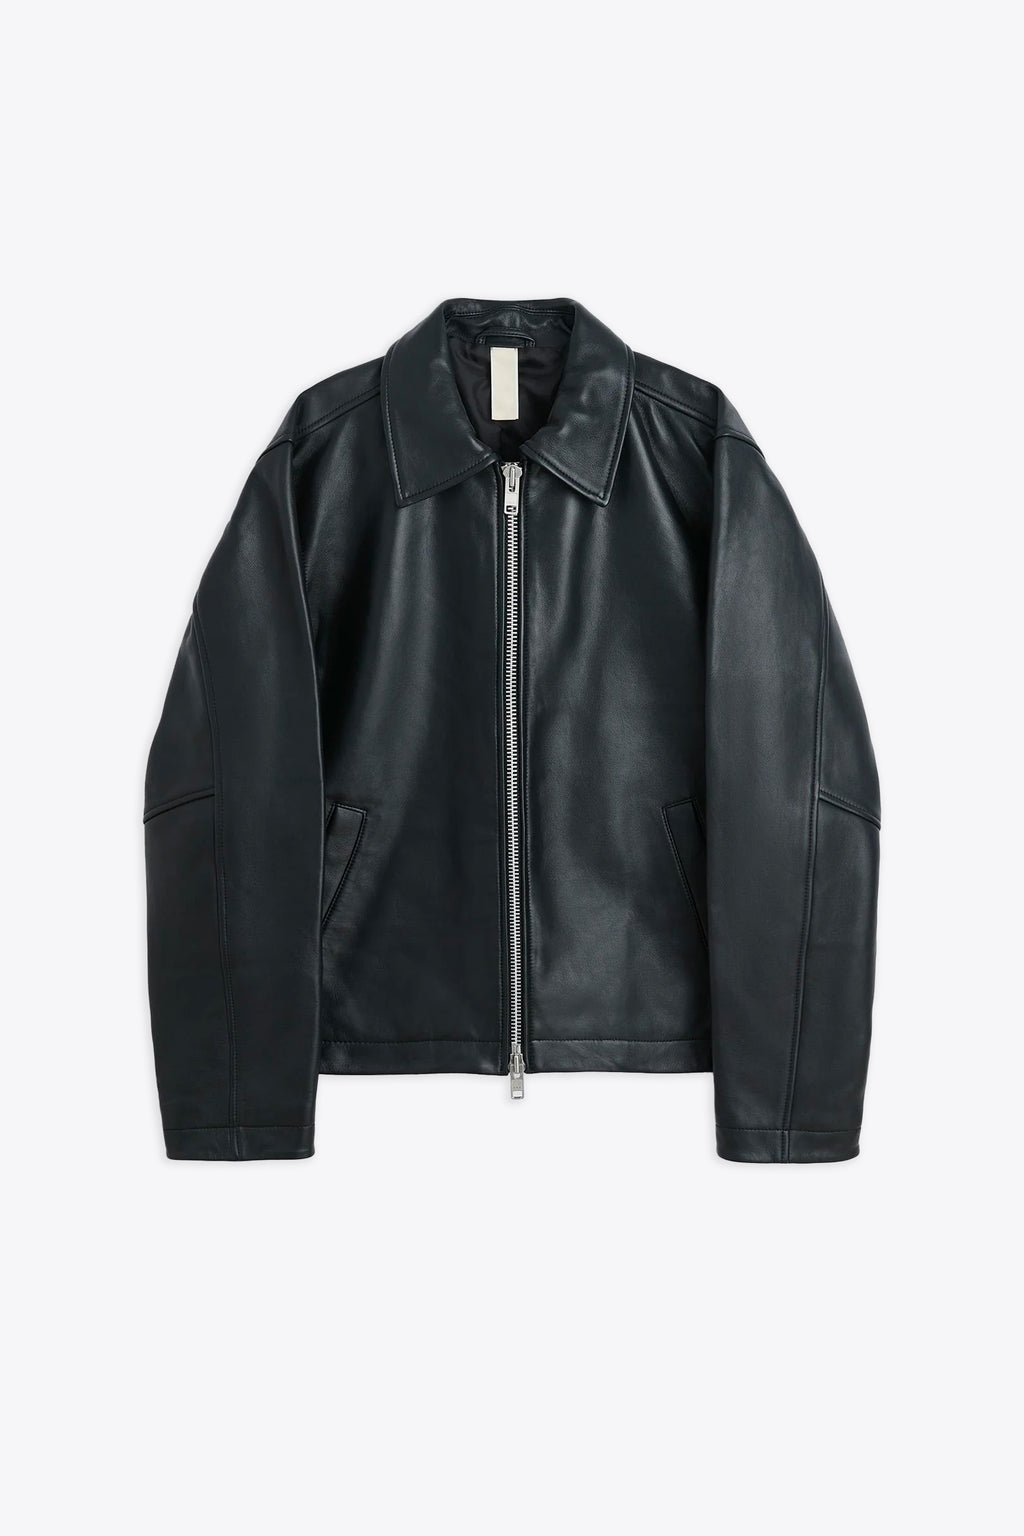 alt-image__Giubbotto-nero-in-pelle-con-zip---Short-Leather-Jacket